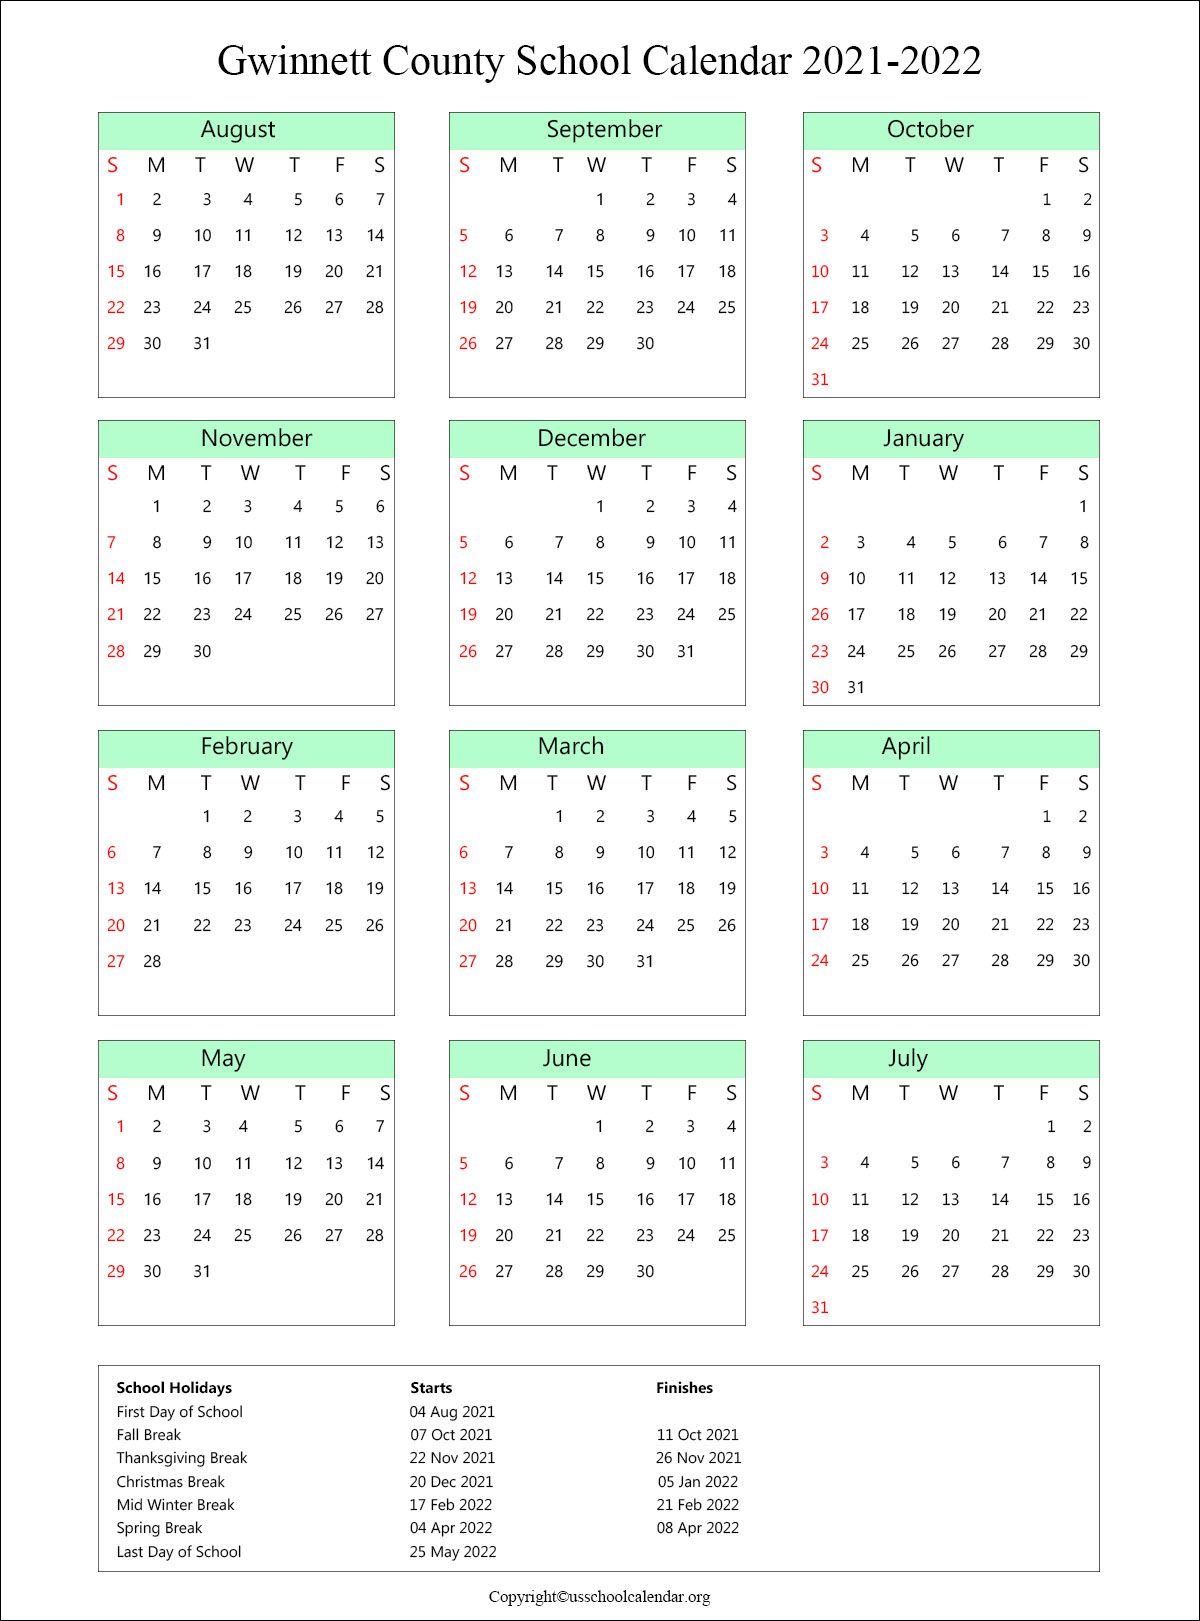 Gwinnett County Calendar 2022 Gwinnett County School Calendar With Holidays 2021-2022